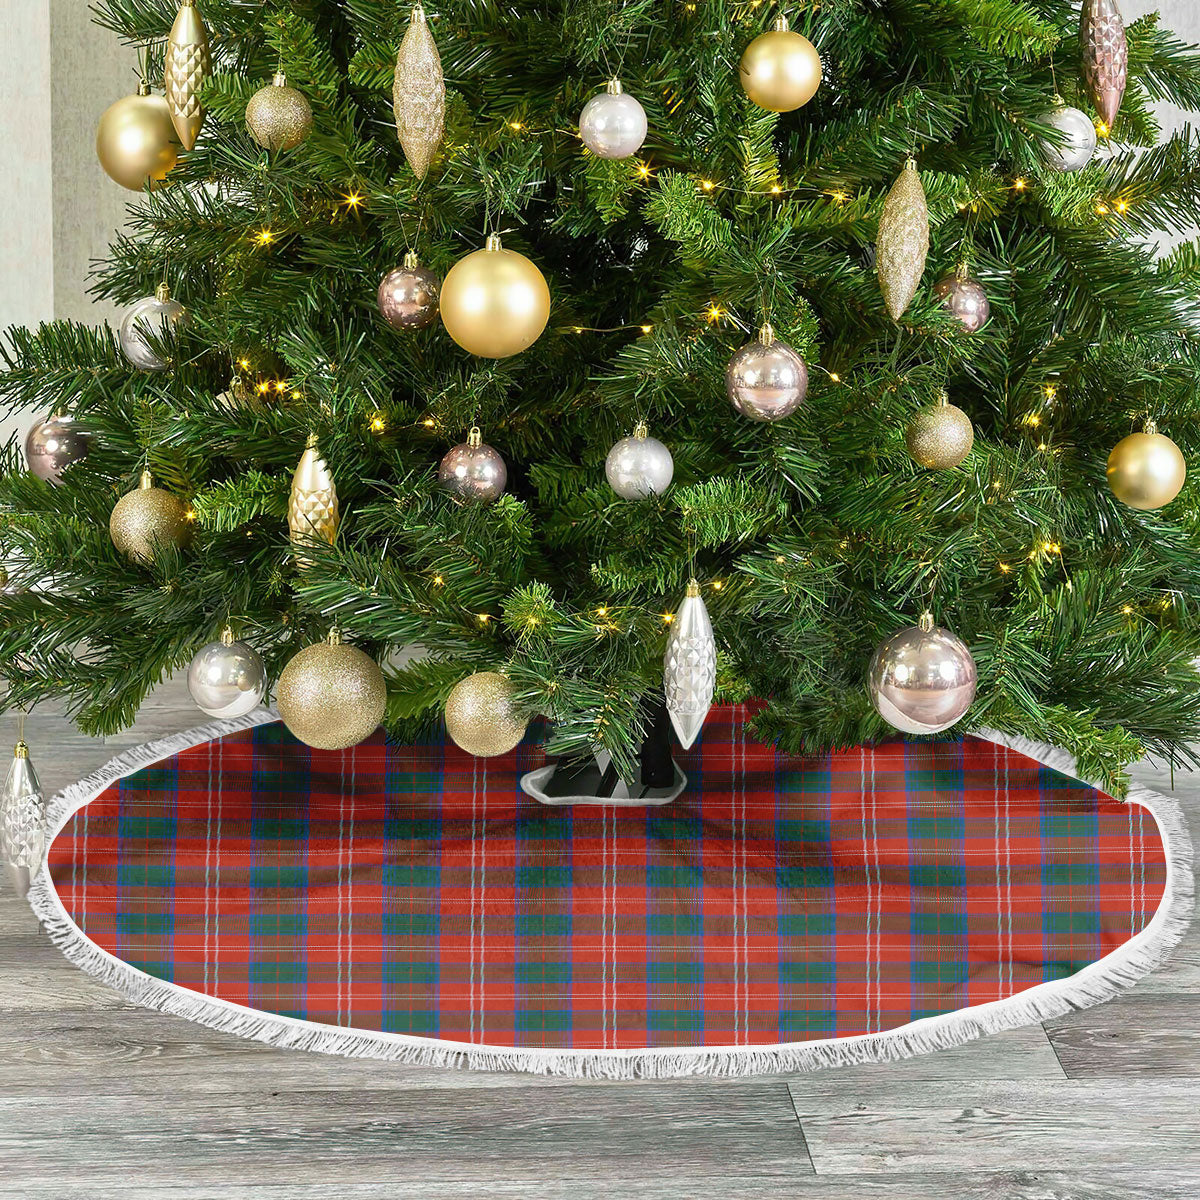 Chisholm Ancient Tartan Christmas Tree Skirt